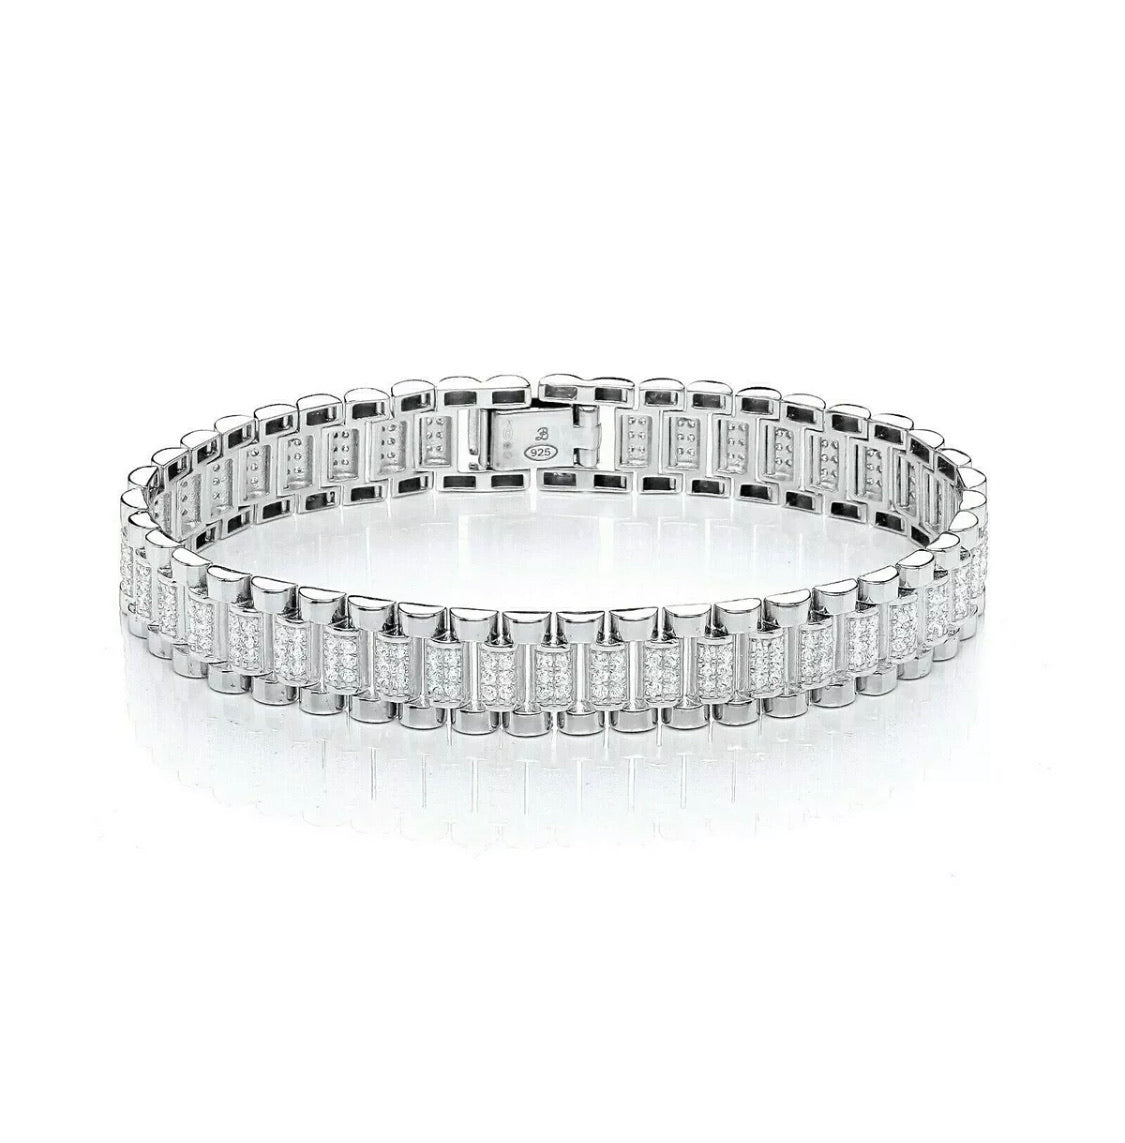 Sterling Silver Diamond Ladies Rolex Watch Strap Bracelet ~ 7.5 inch - NEW